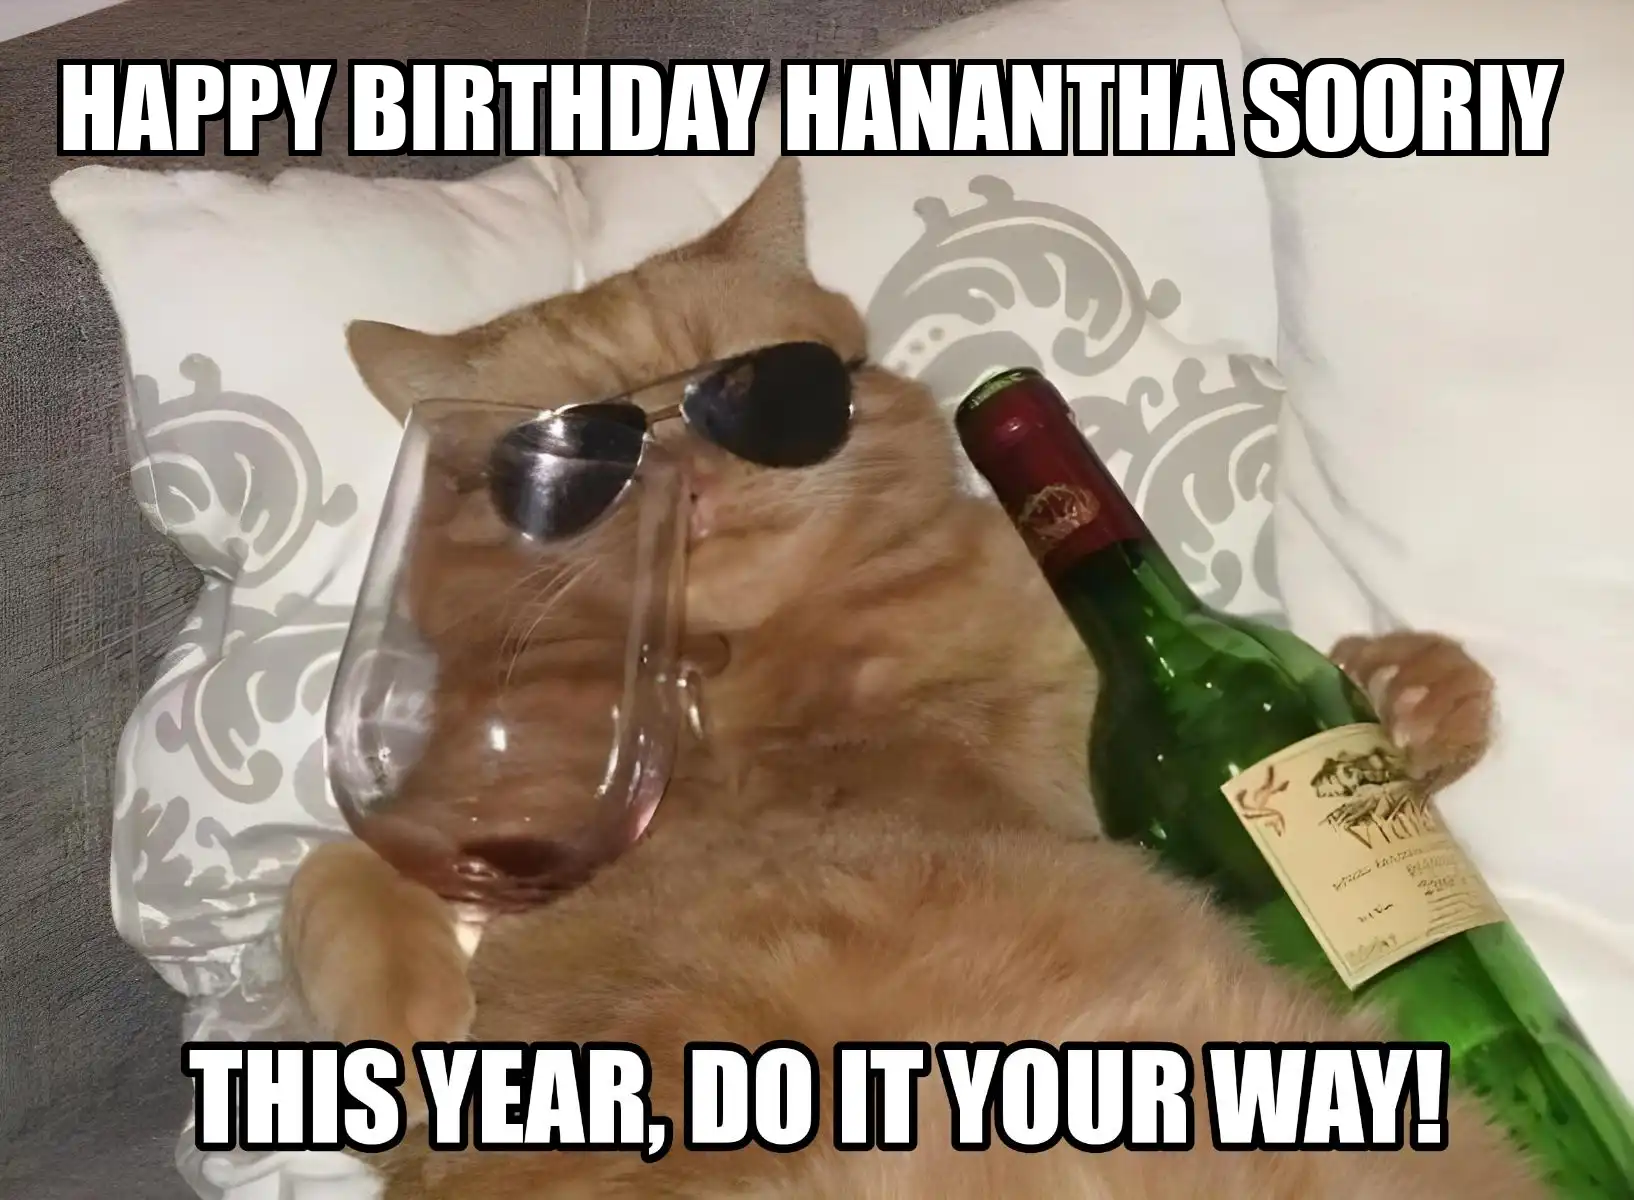 Happy Birthday Hanantha sooriy This Year Do It Your Way Meme